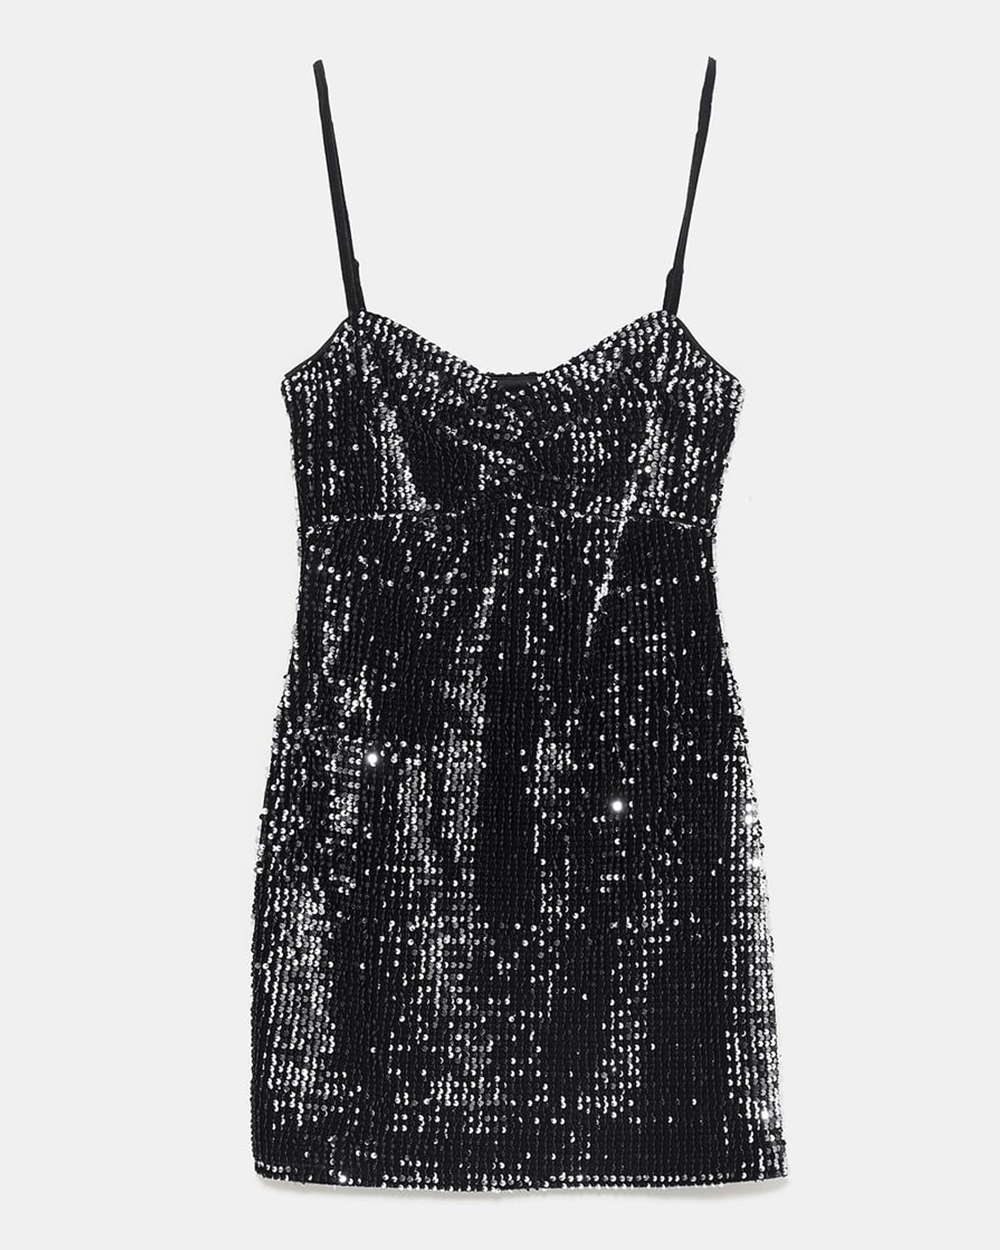 Sequin dress, $40 from Zara